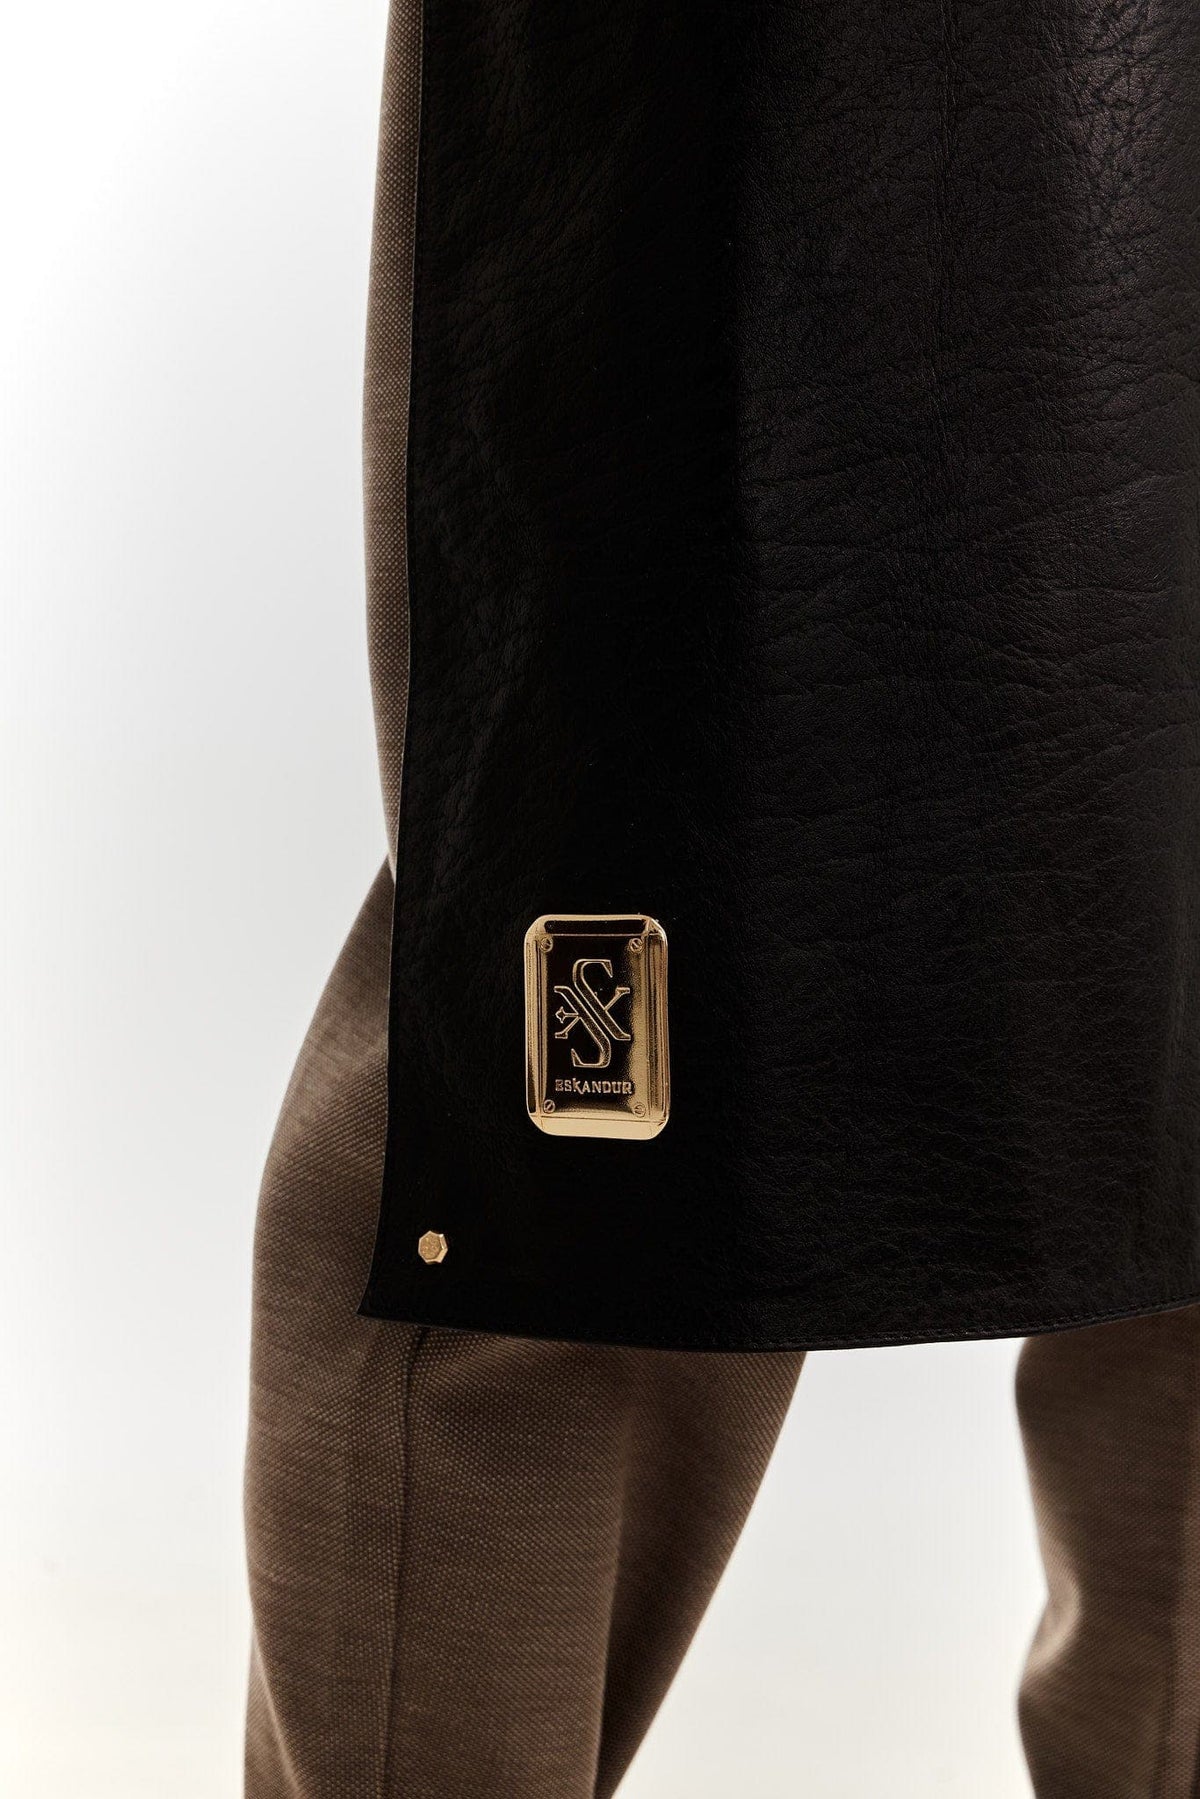 Eskandur men&#39;s black leather luxury premium apron zoom on gold logo plate